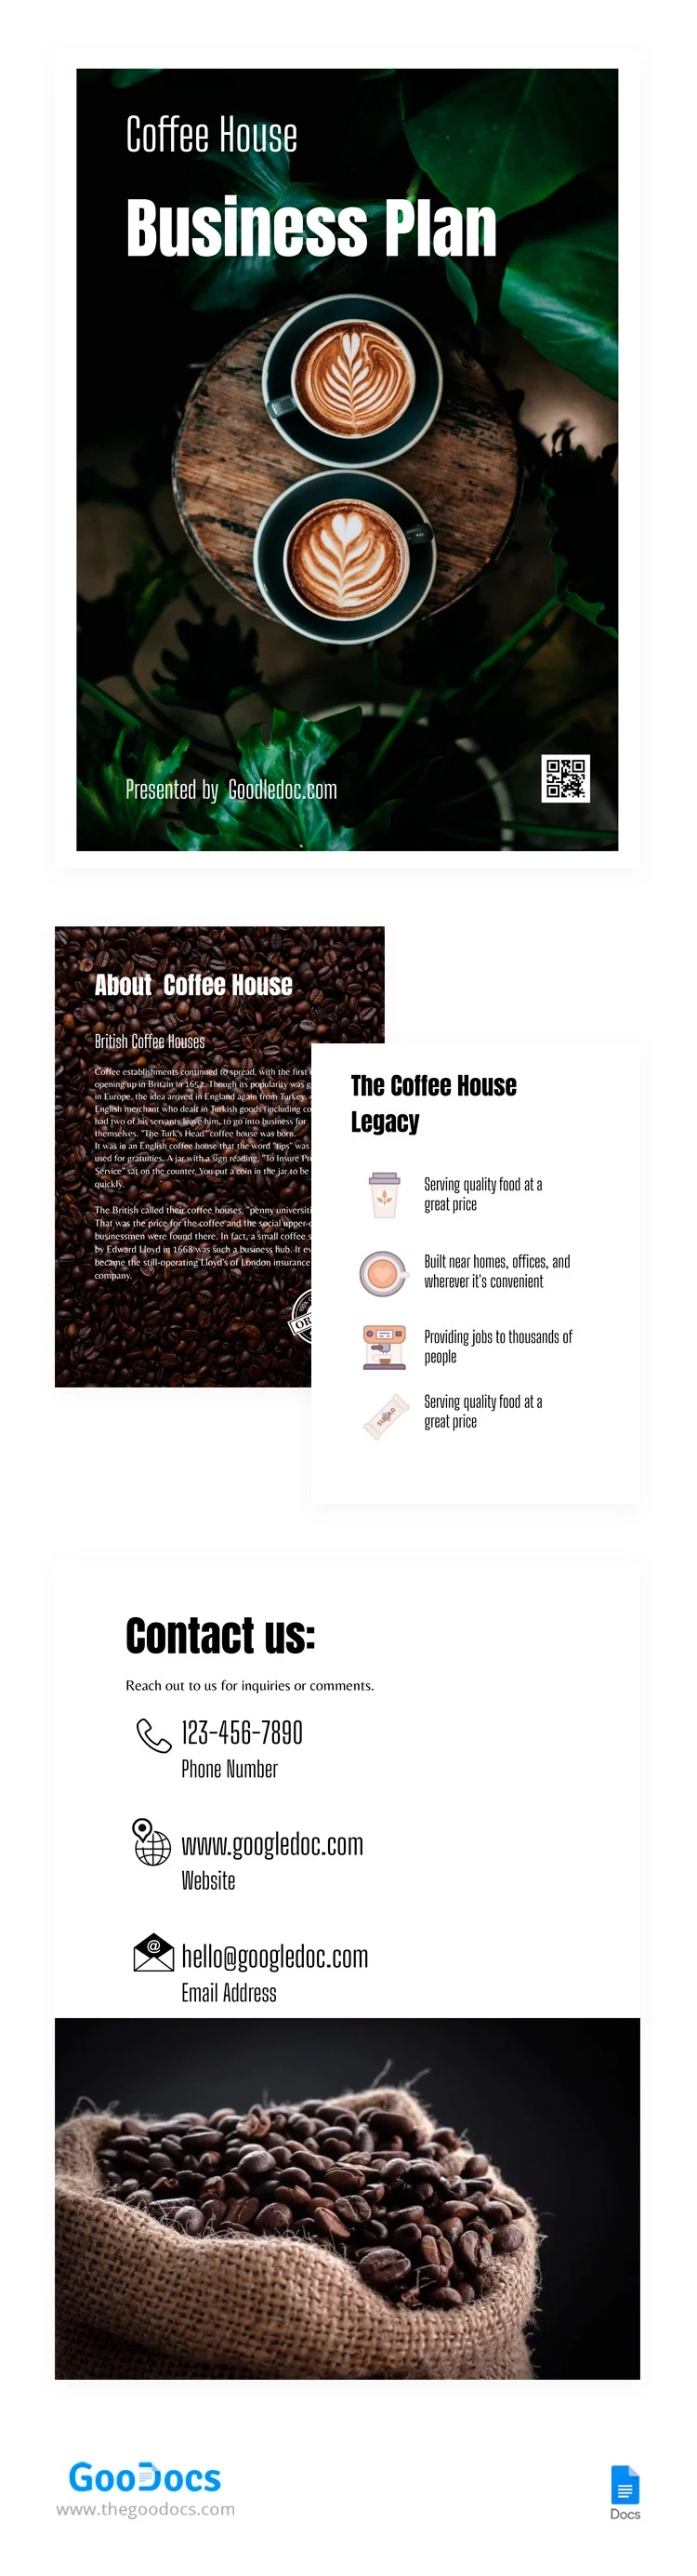 Coffee Business Plan - free Google Docs Template - 10062909